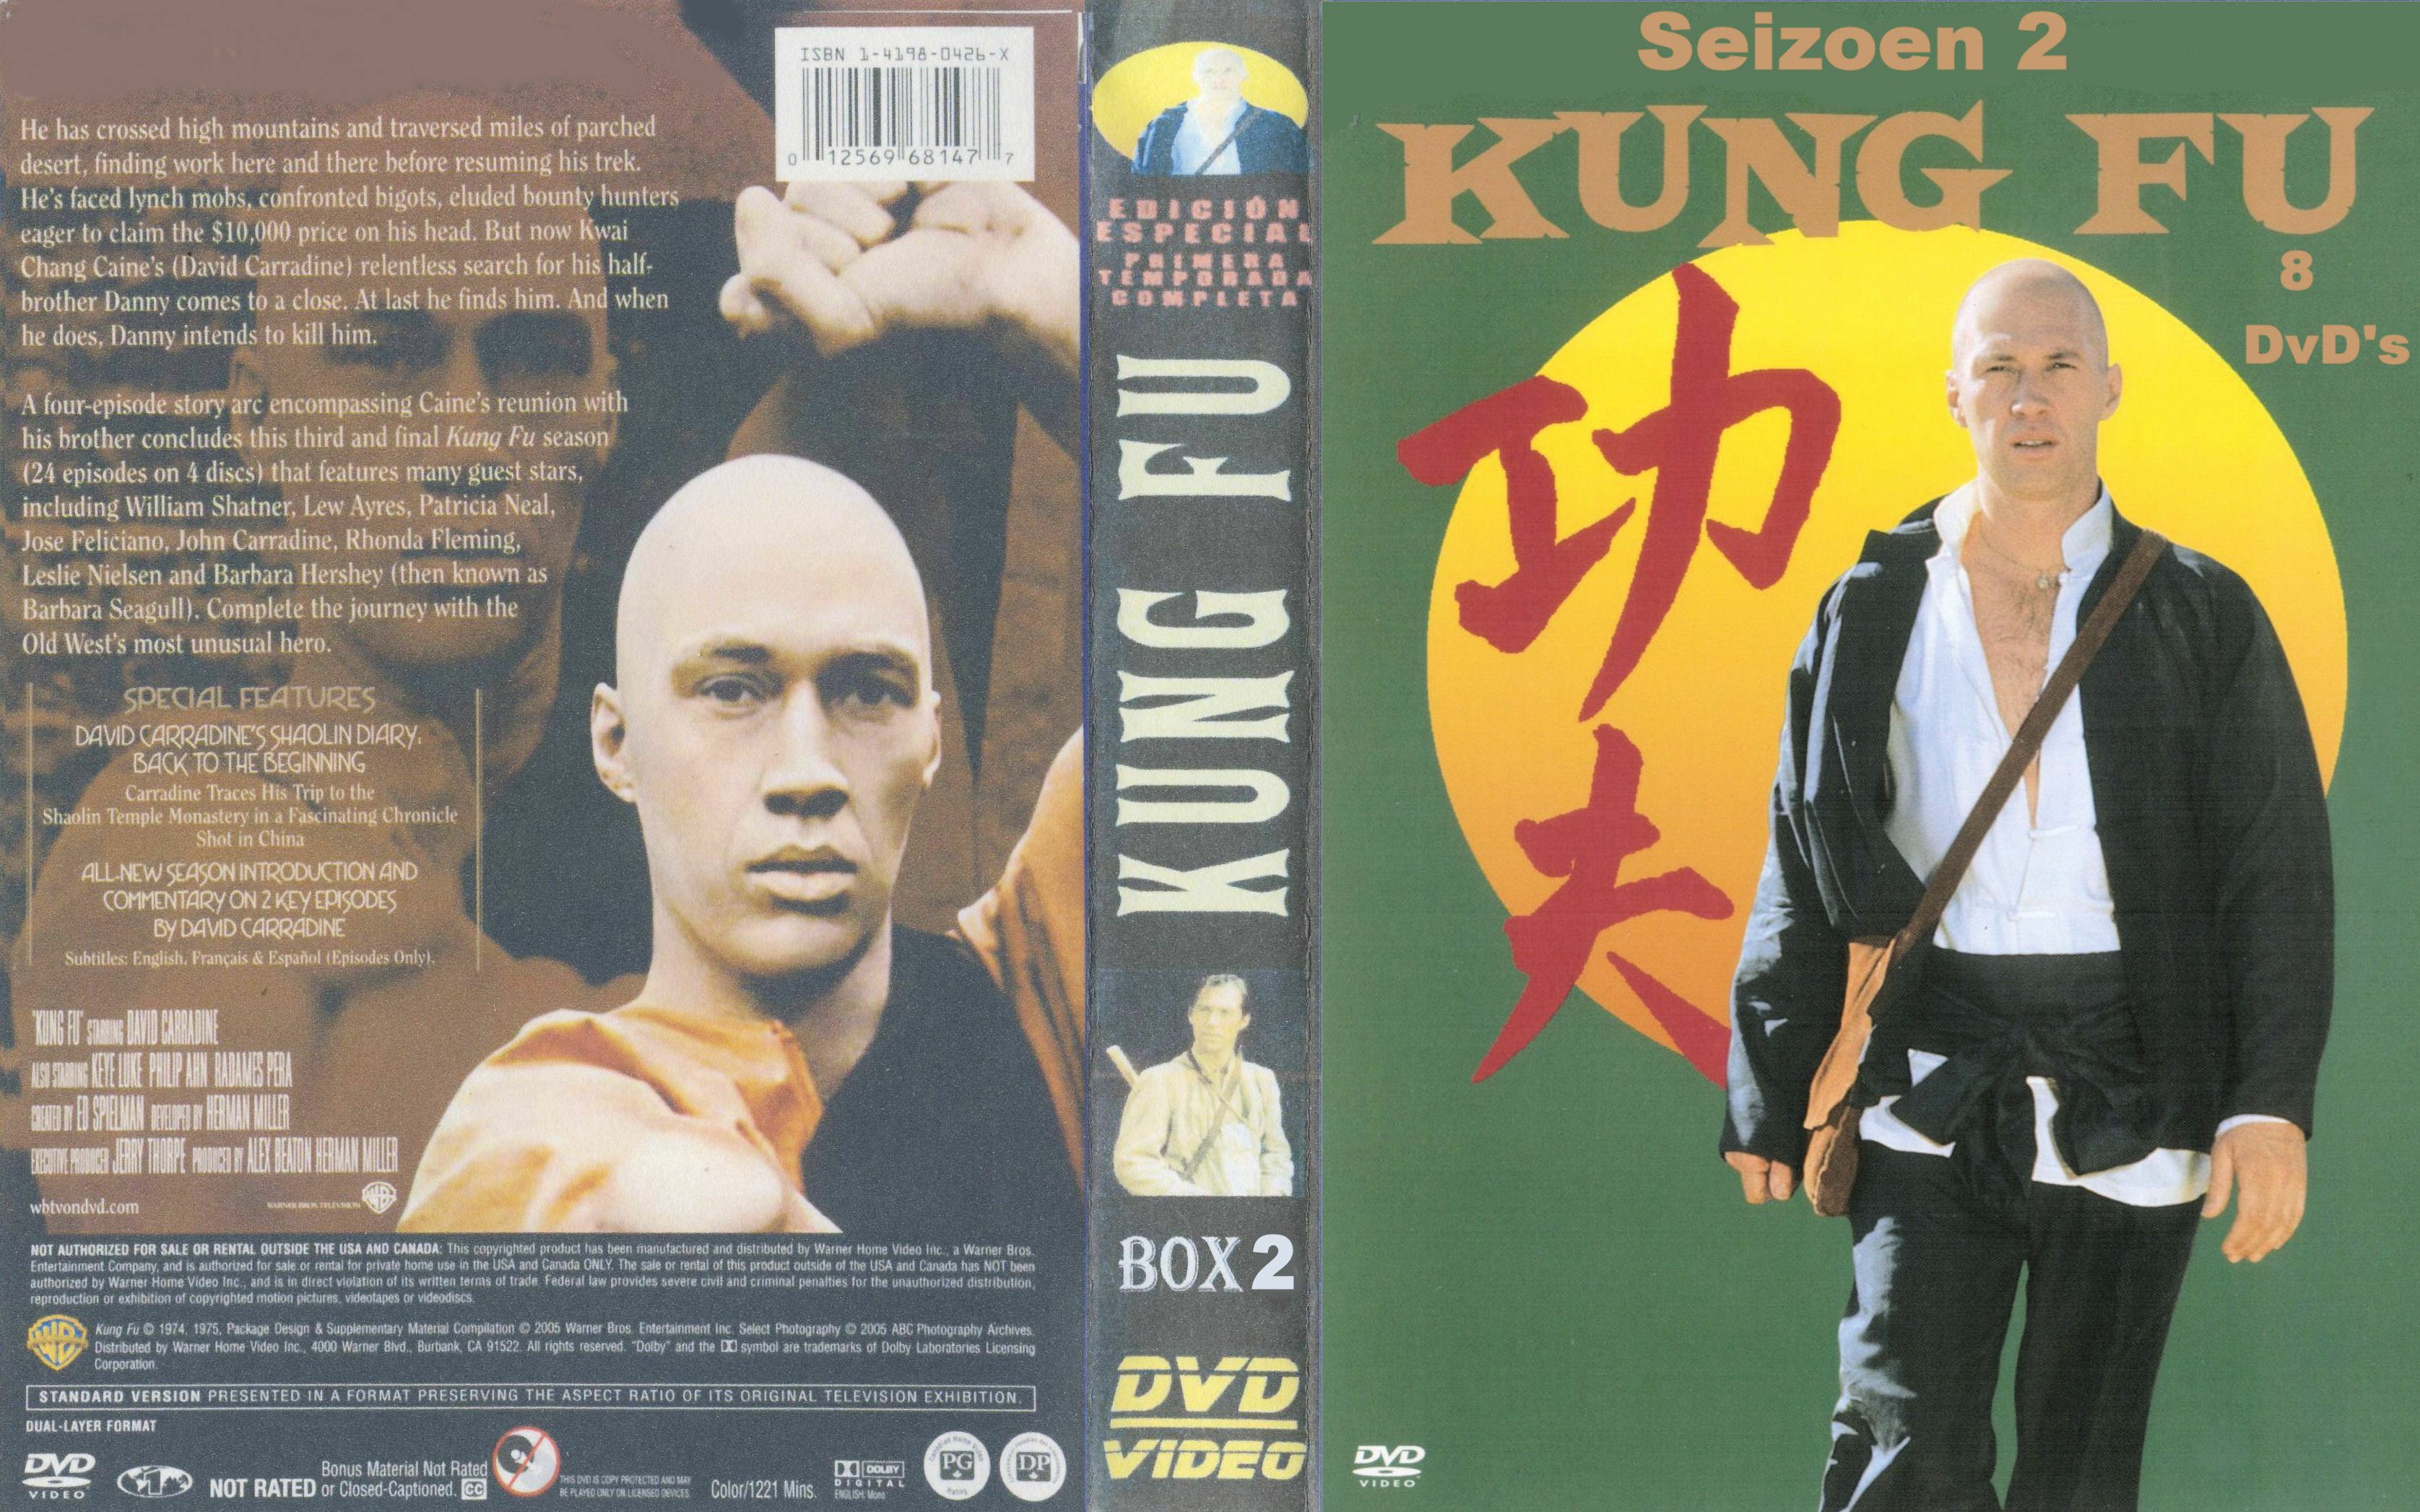 Kung Fu ( David Carradine ) 1973 - 74 Seizoen 2 - DvD 5